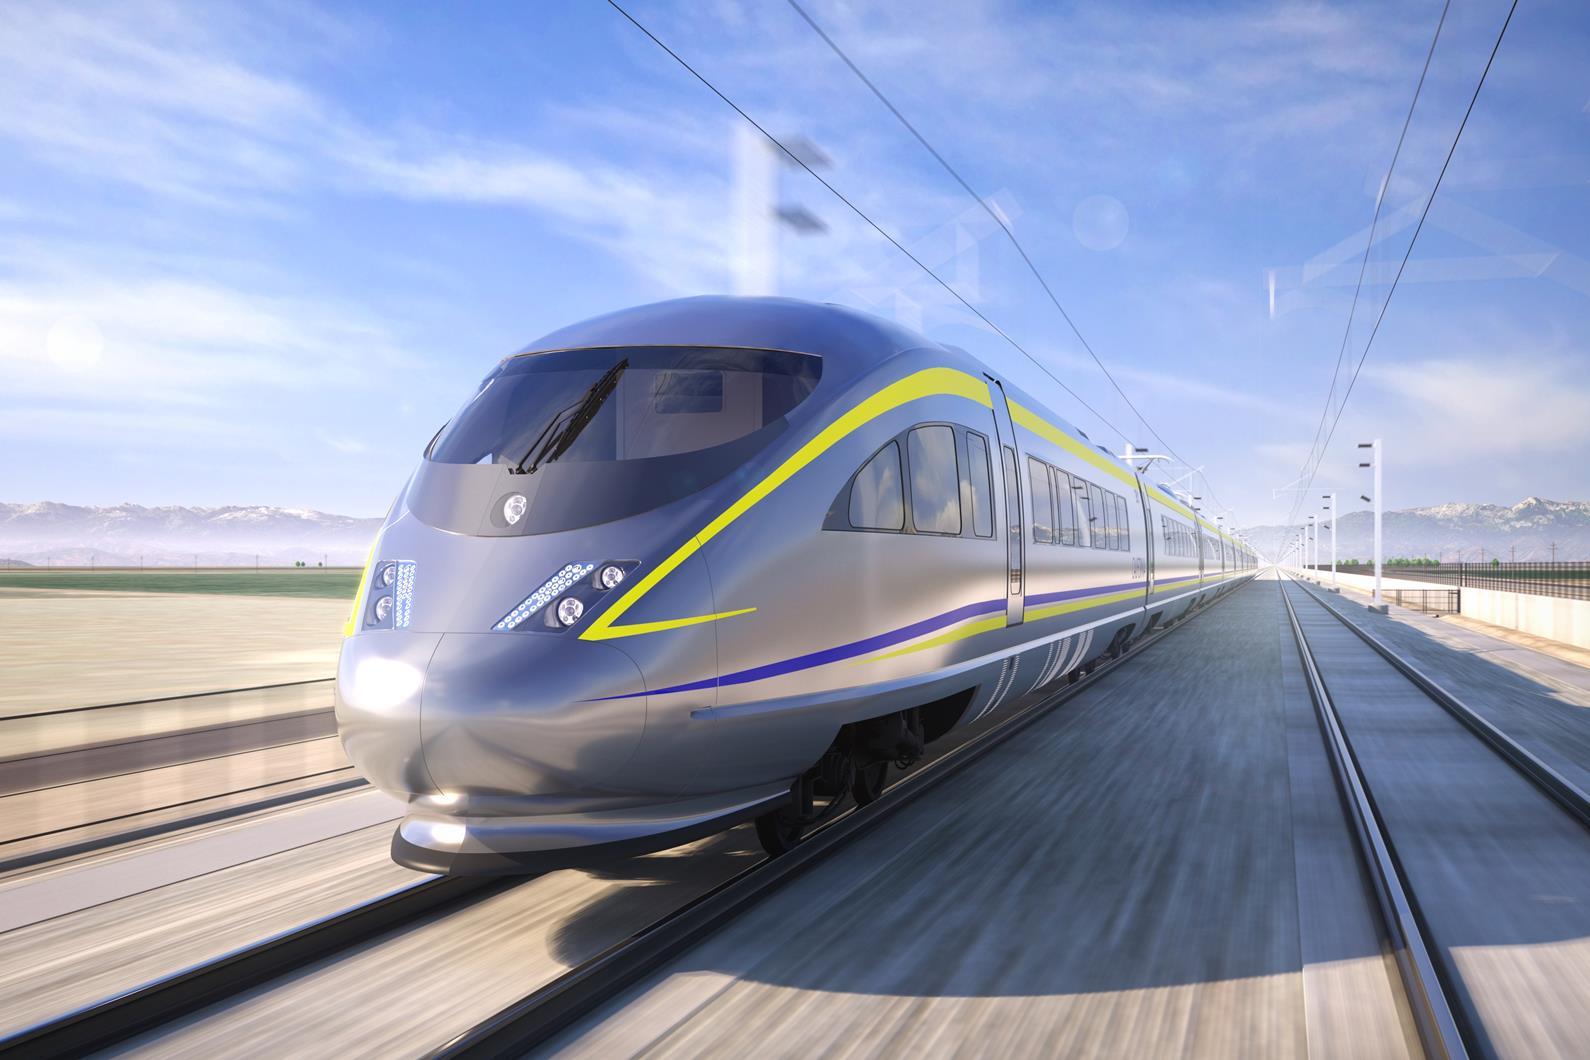 High-speed rail in California: Alstom or Siemens?